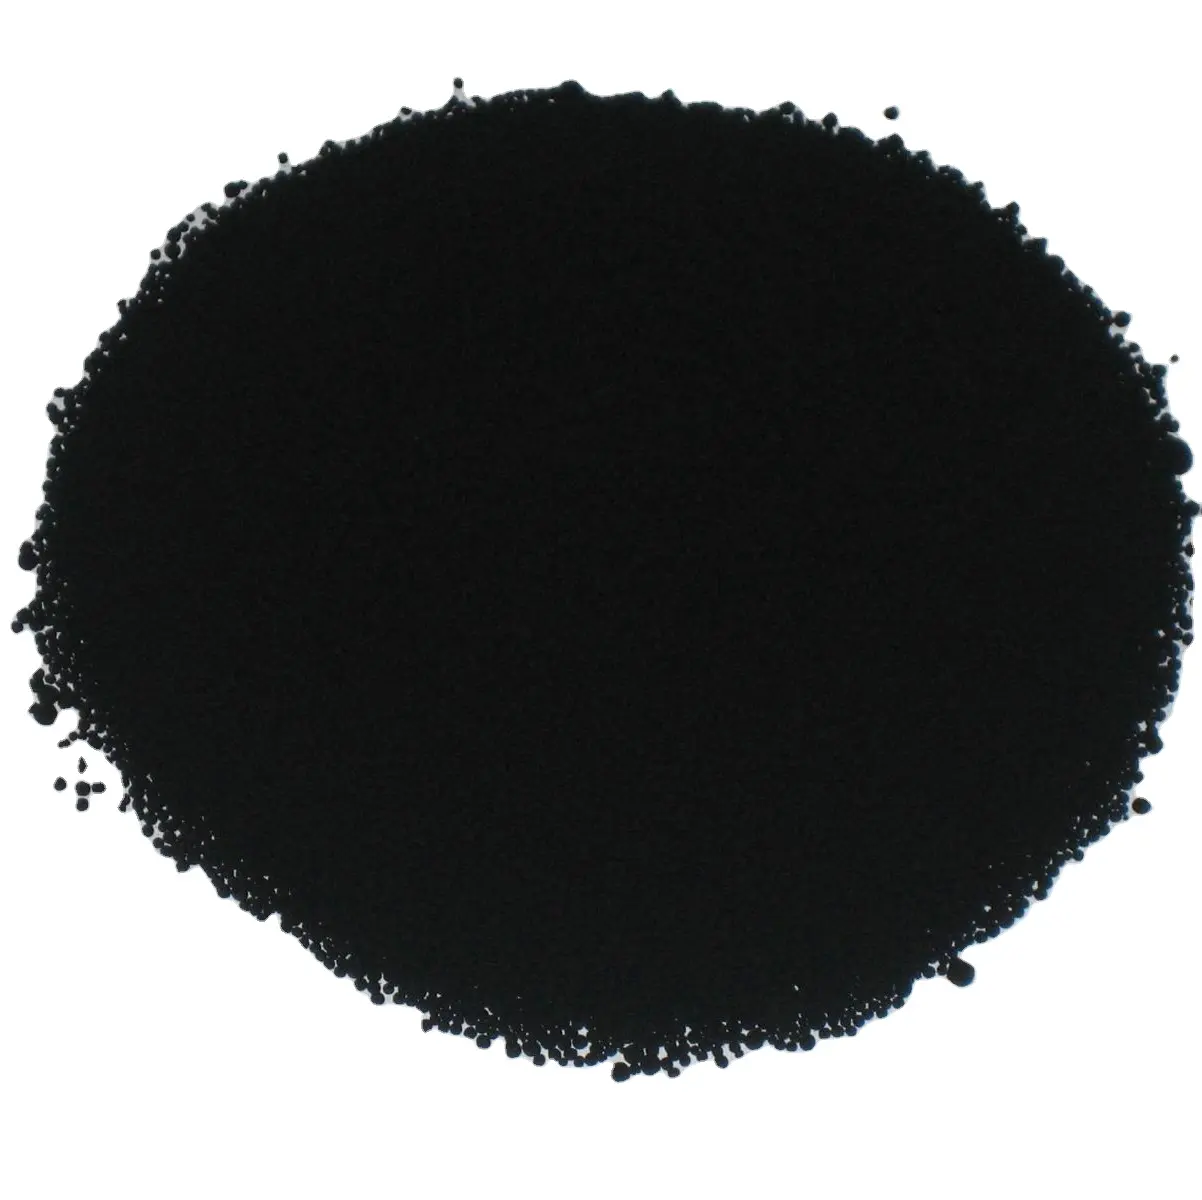 Carbón activado en polvo a base de carbón negro de gran oferta en producción química Negro carbón